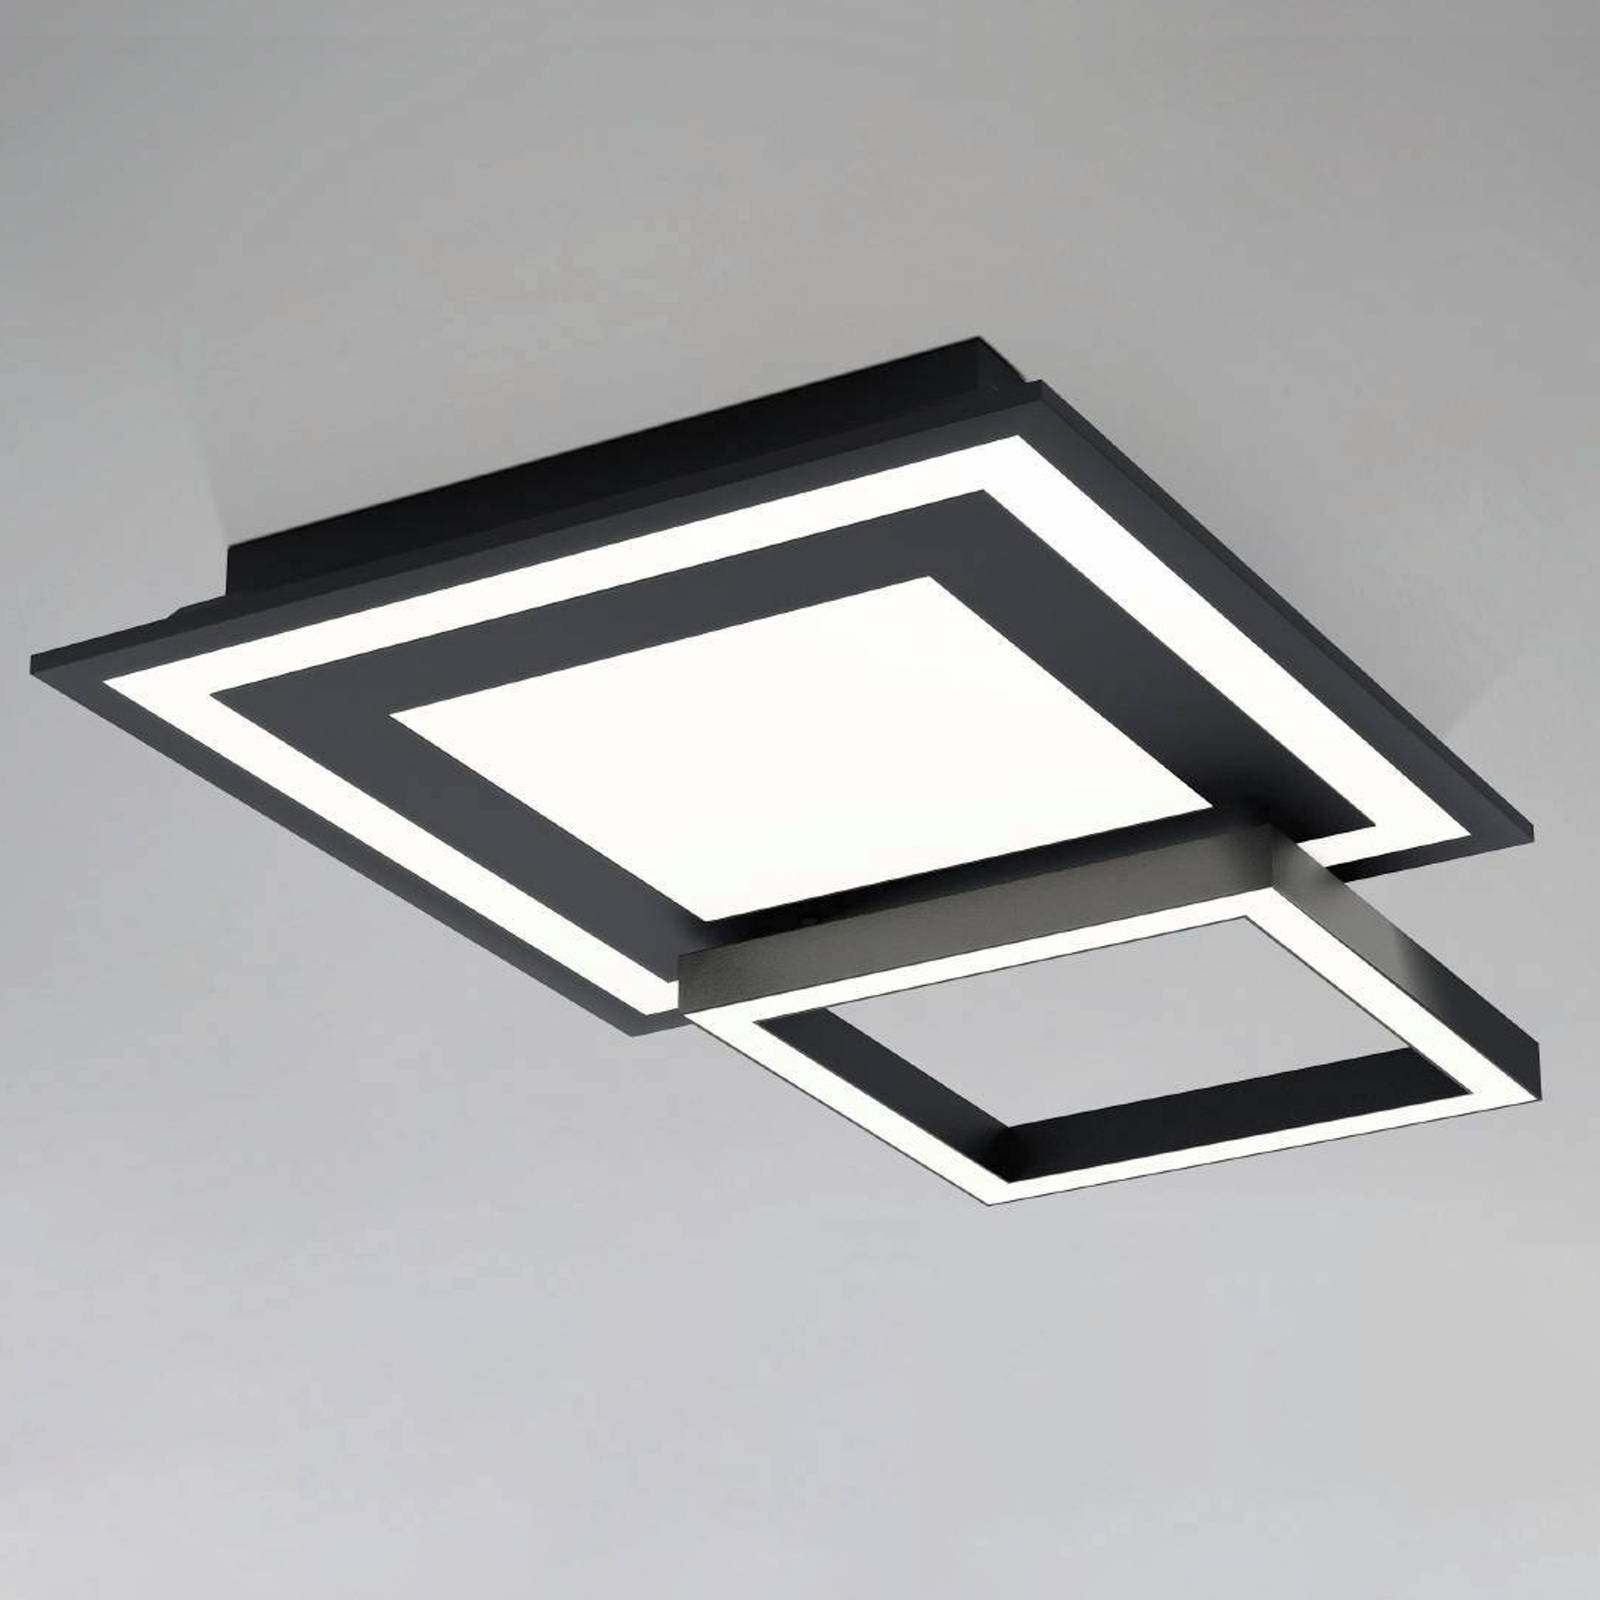 Image of EGLO connect Savatarila-C plafonnier LED, noir 9002759993122